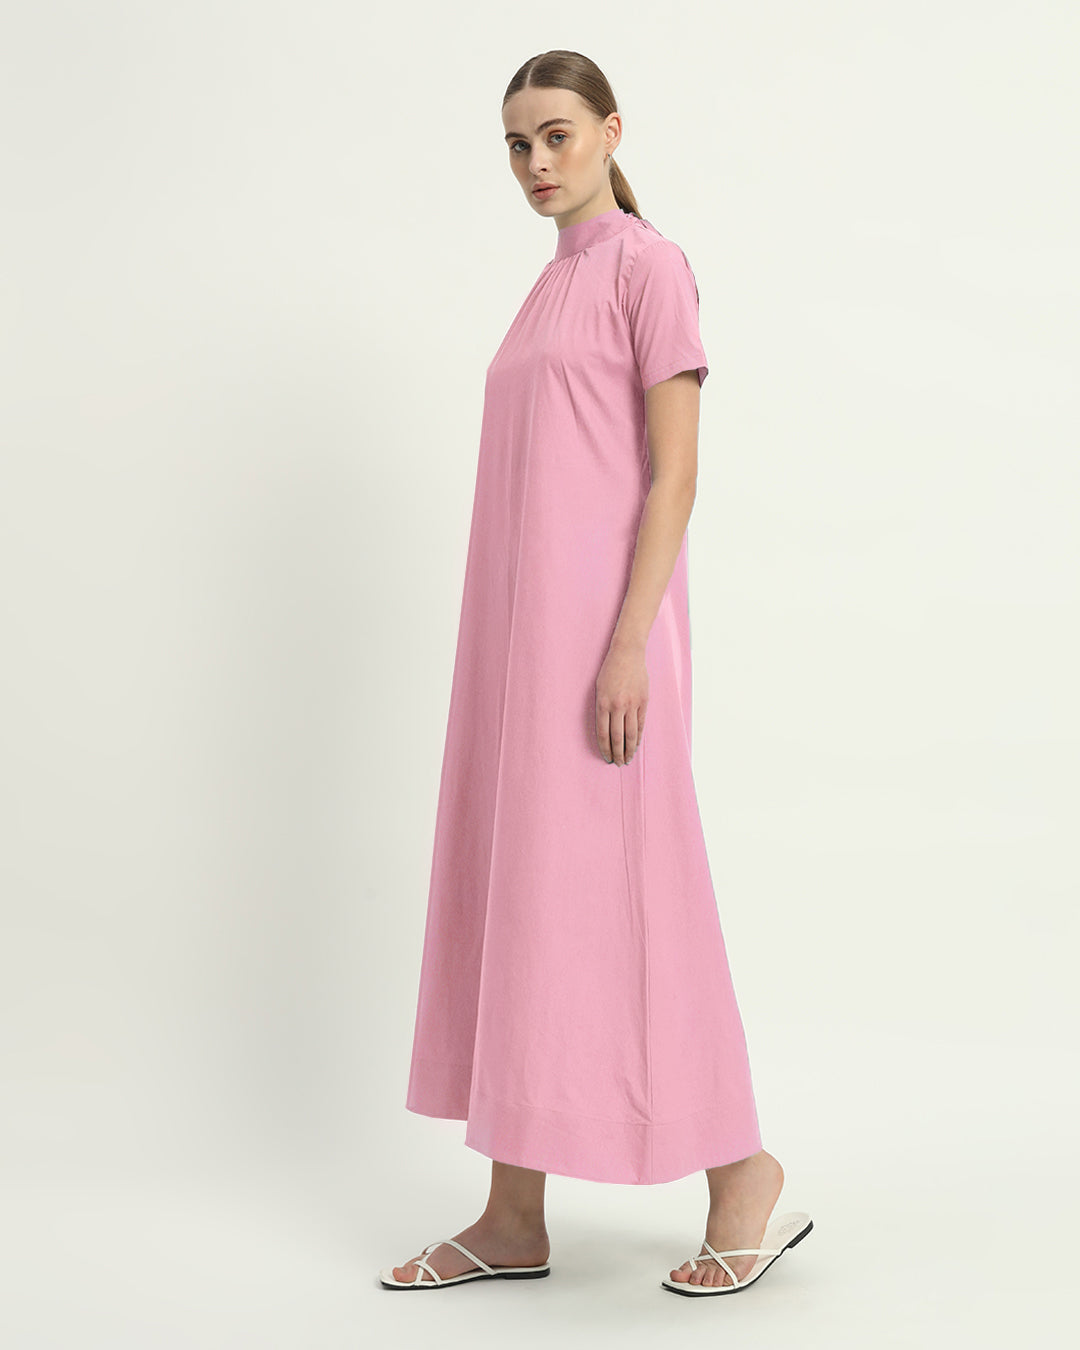 The Fondant Pink Hermon Cotton Dress